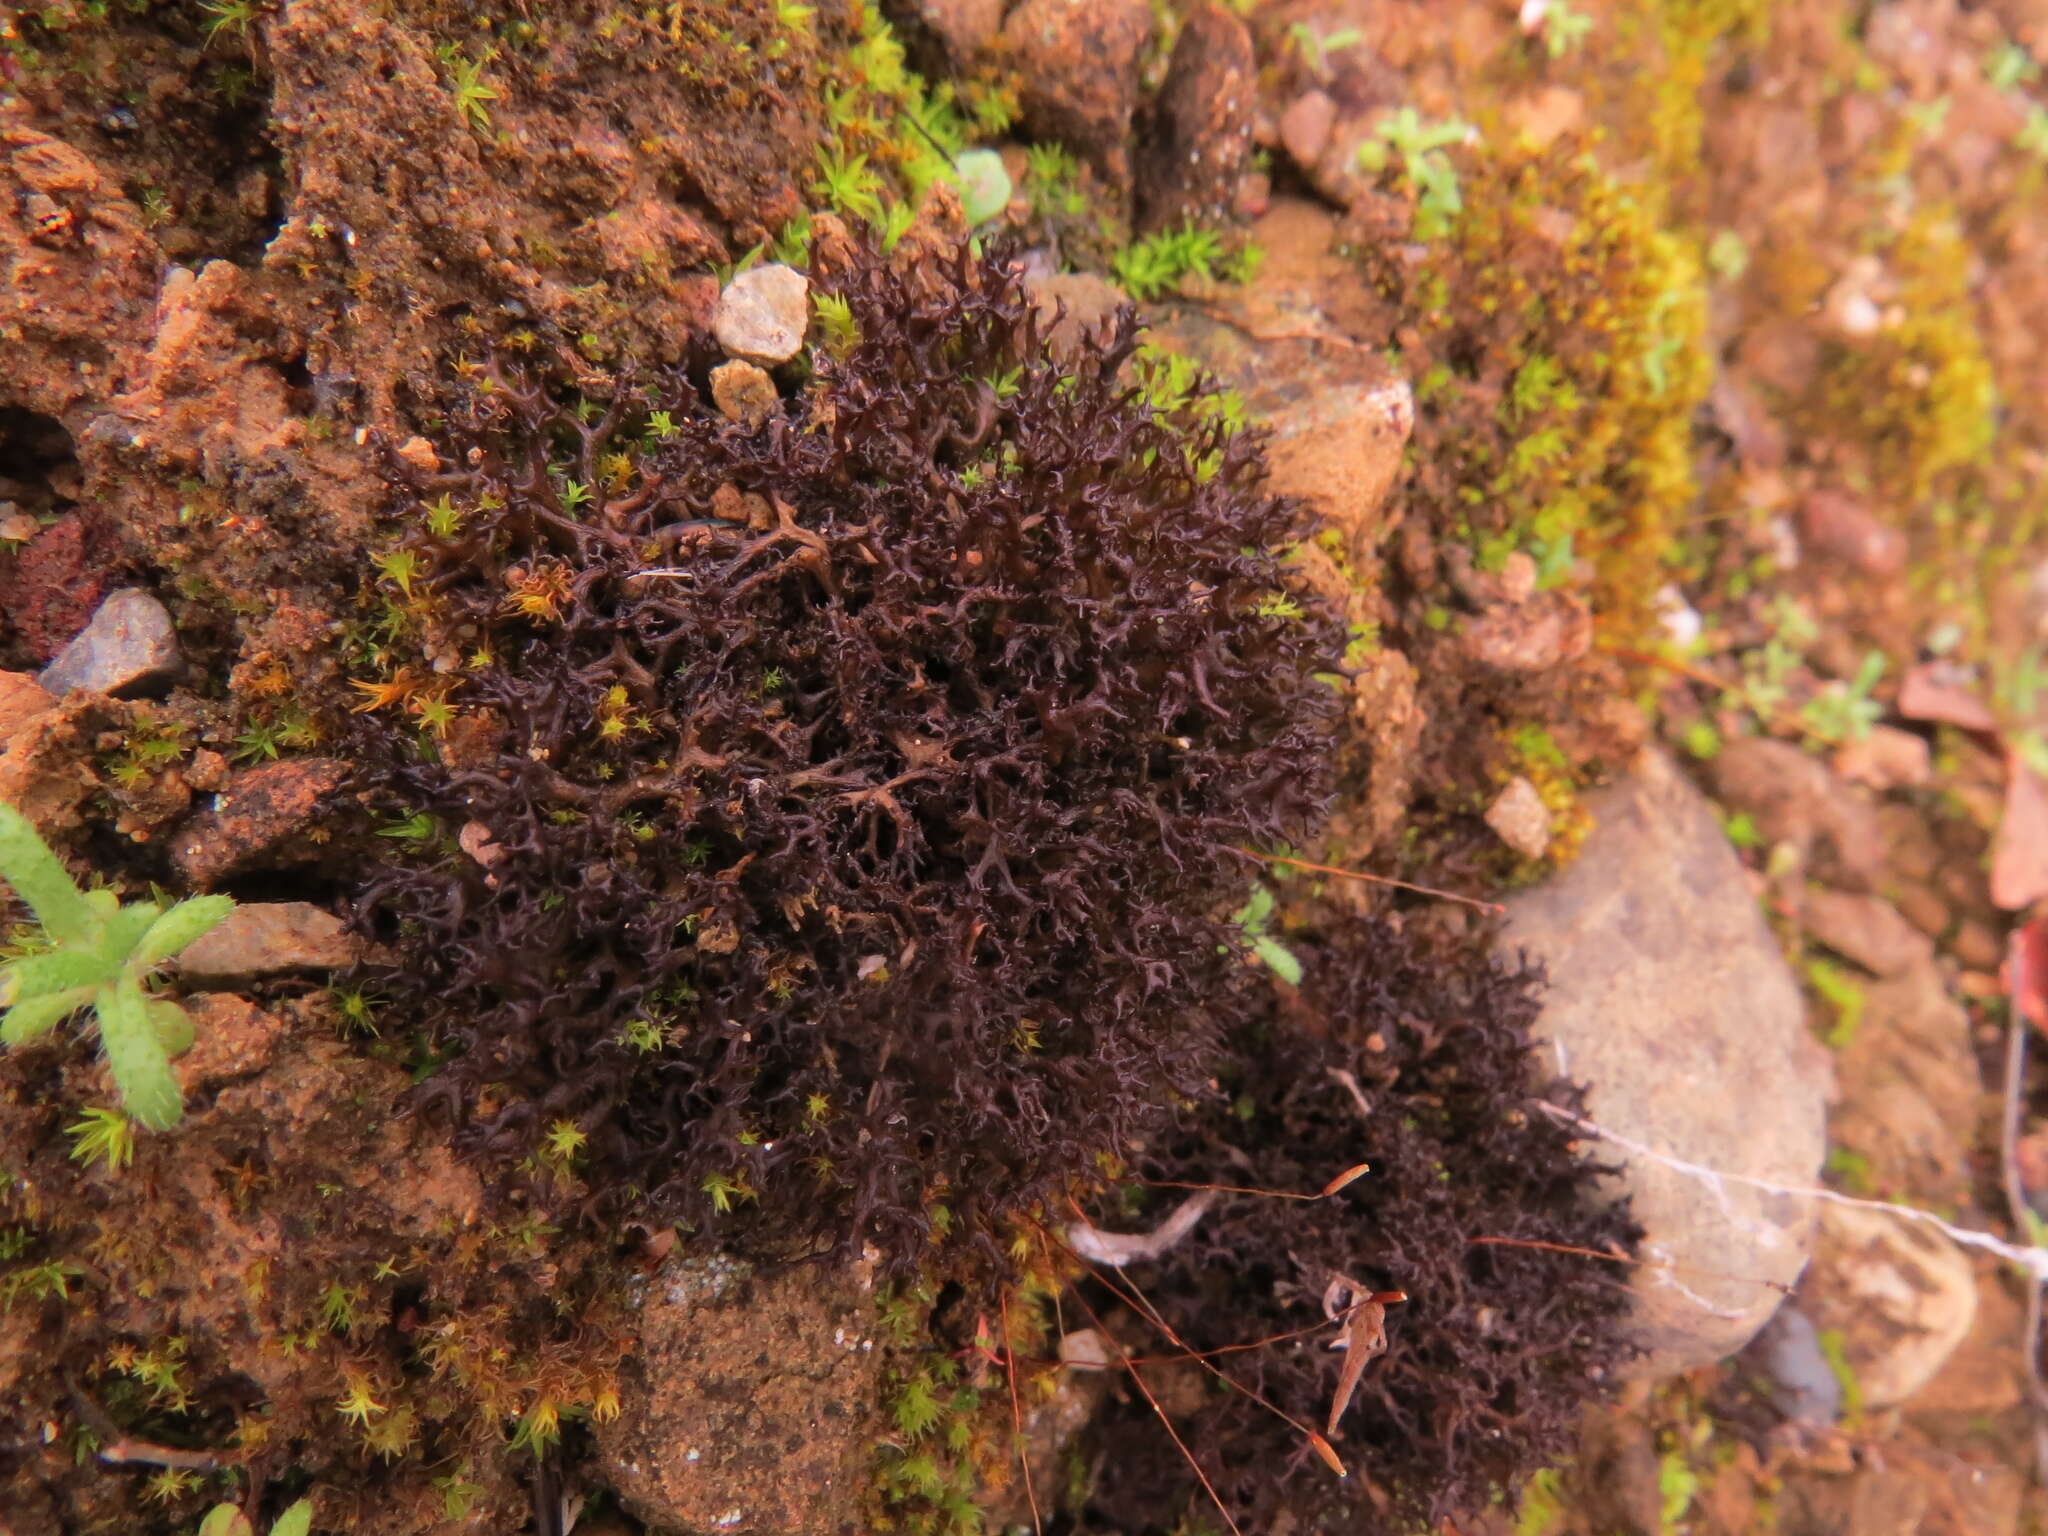 Image of Cetraria muricata (Ach.) Eckfeldt